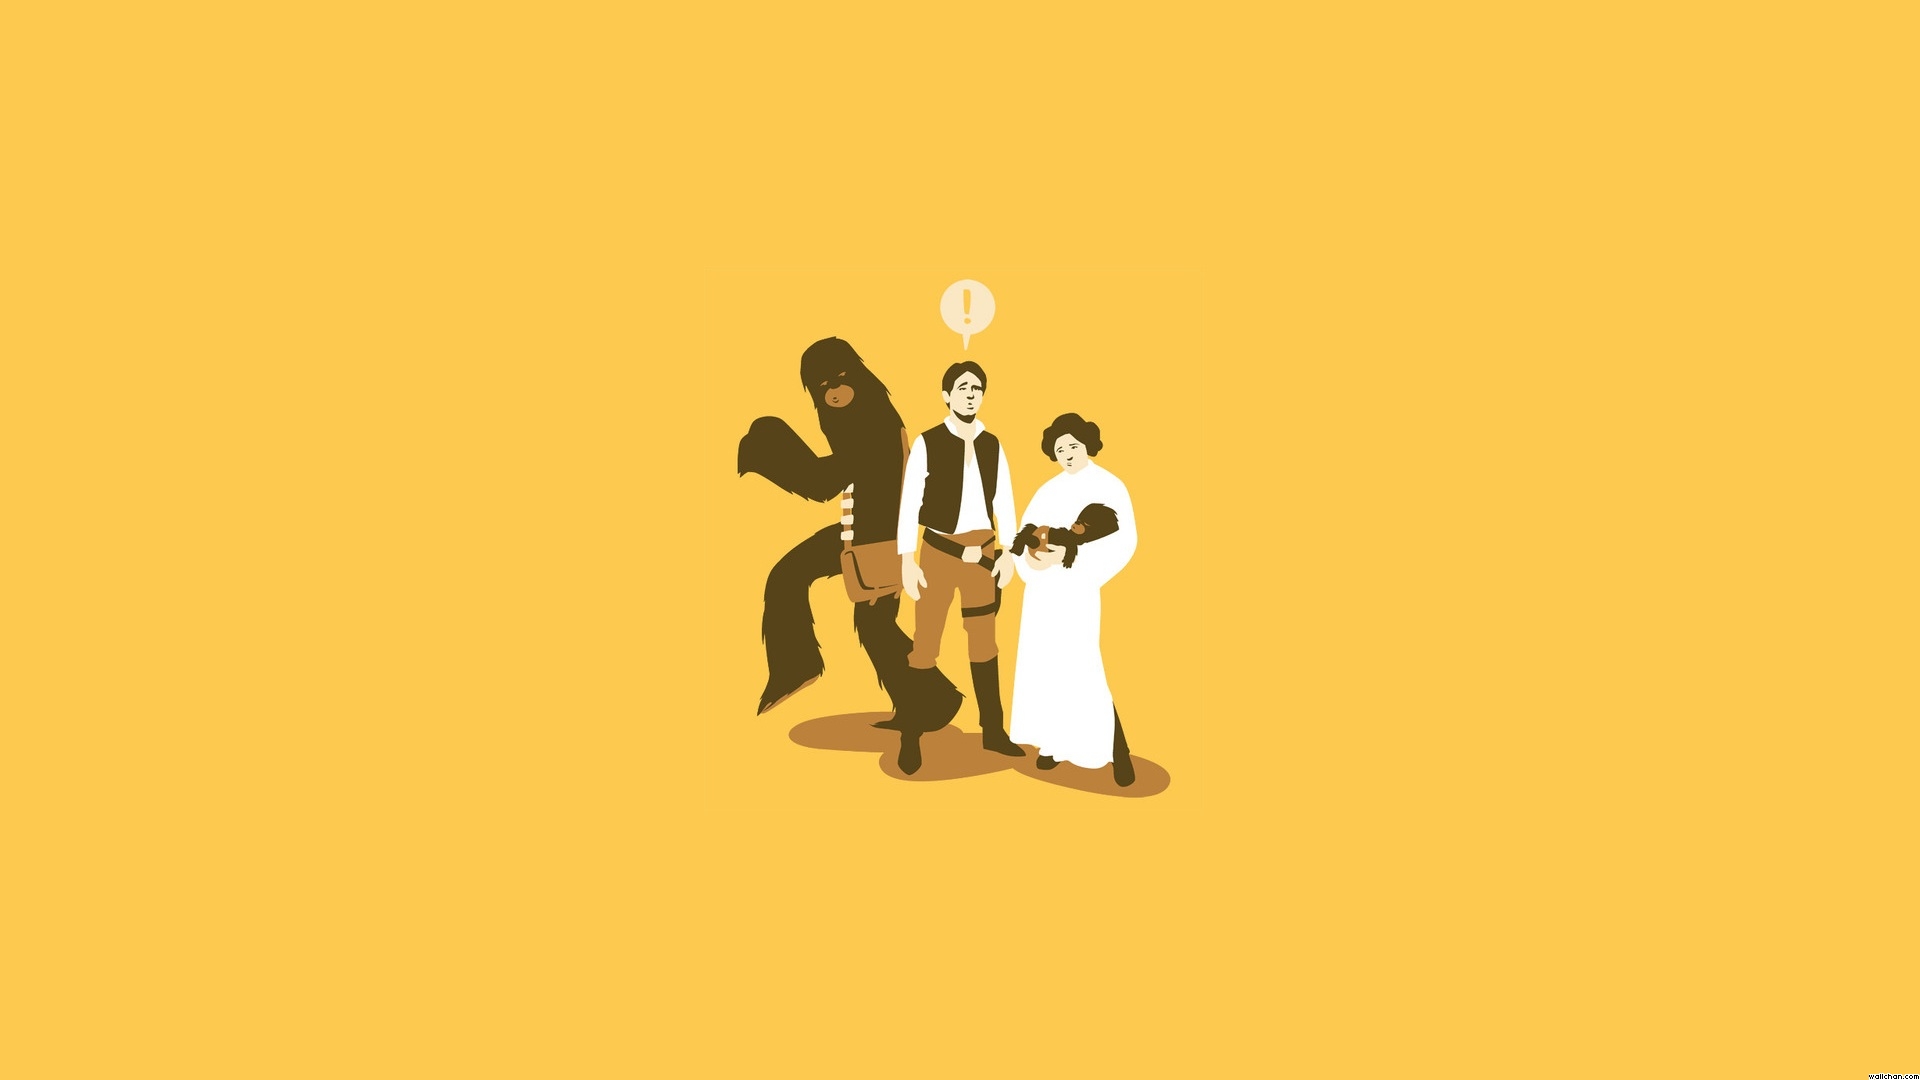 Funny Han, Leia Chewie Wallpaper Wars Wallpaper